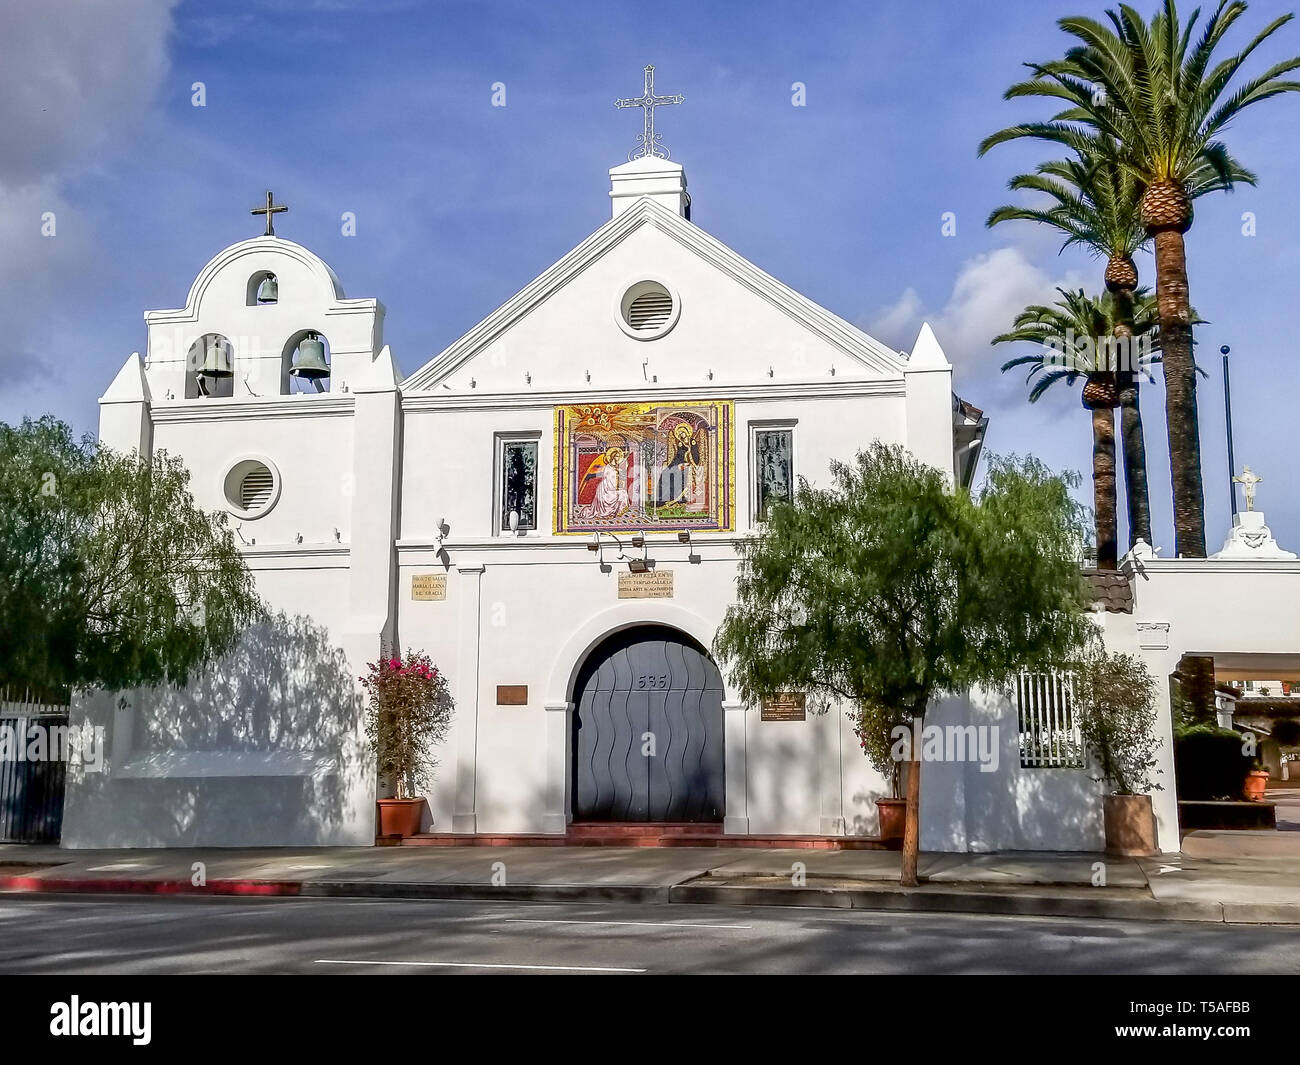 Our Lady of the Angels historic church in old Los Angeles, California - La Iglesia de Nuestra Señora la Reina de los Ángeles - exterior in sunshine. Stock Photo